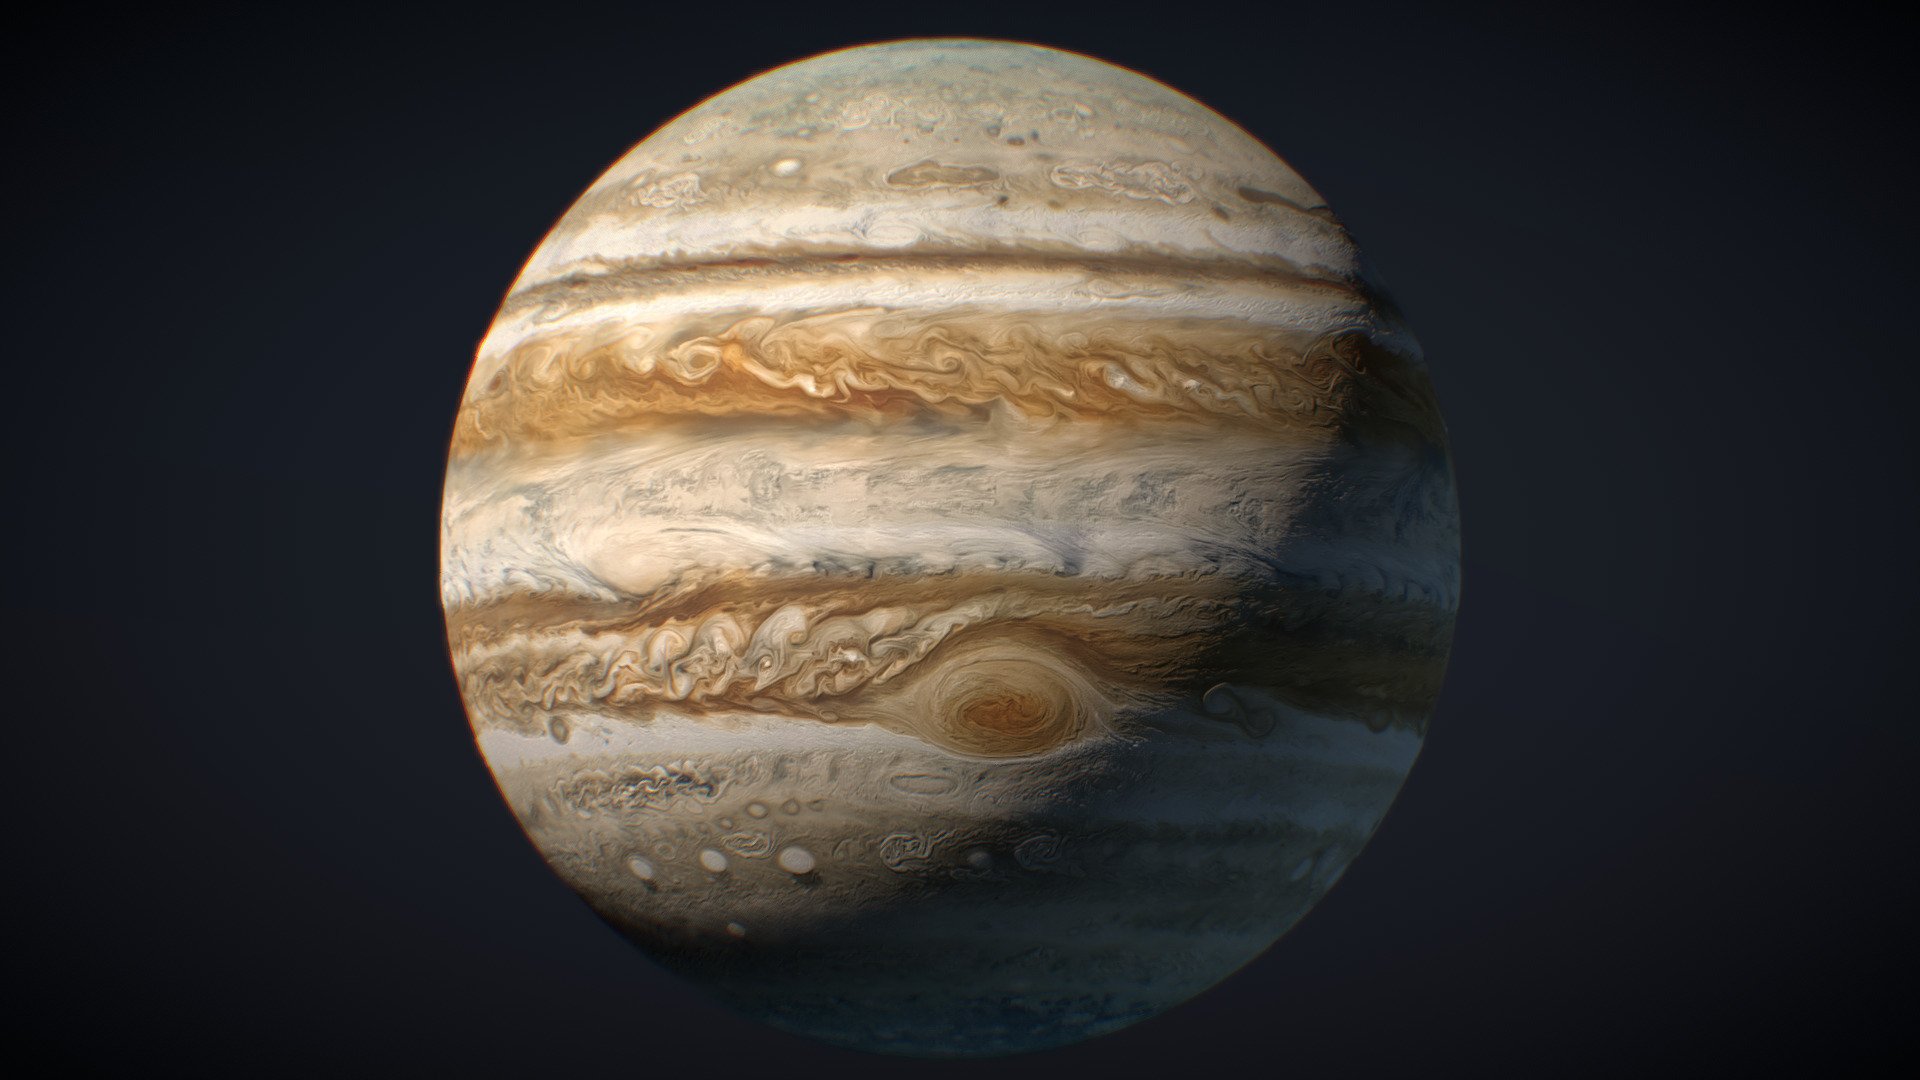 A 3D globe of the planet Jupiter - The Planet Jupiter 3D Globe - 3D model by v7x 3d model